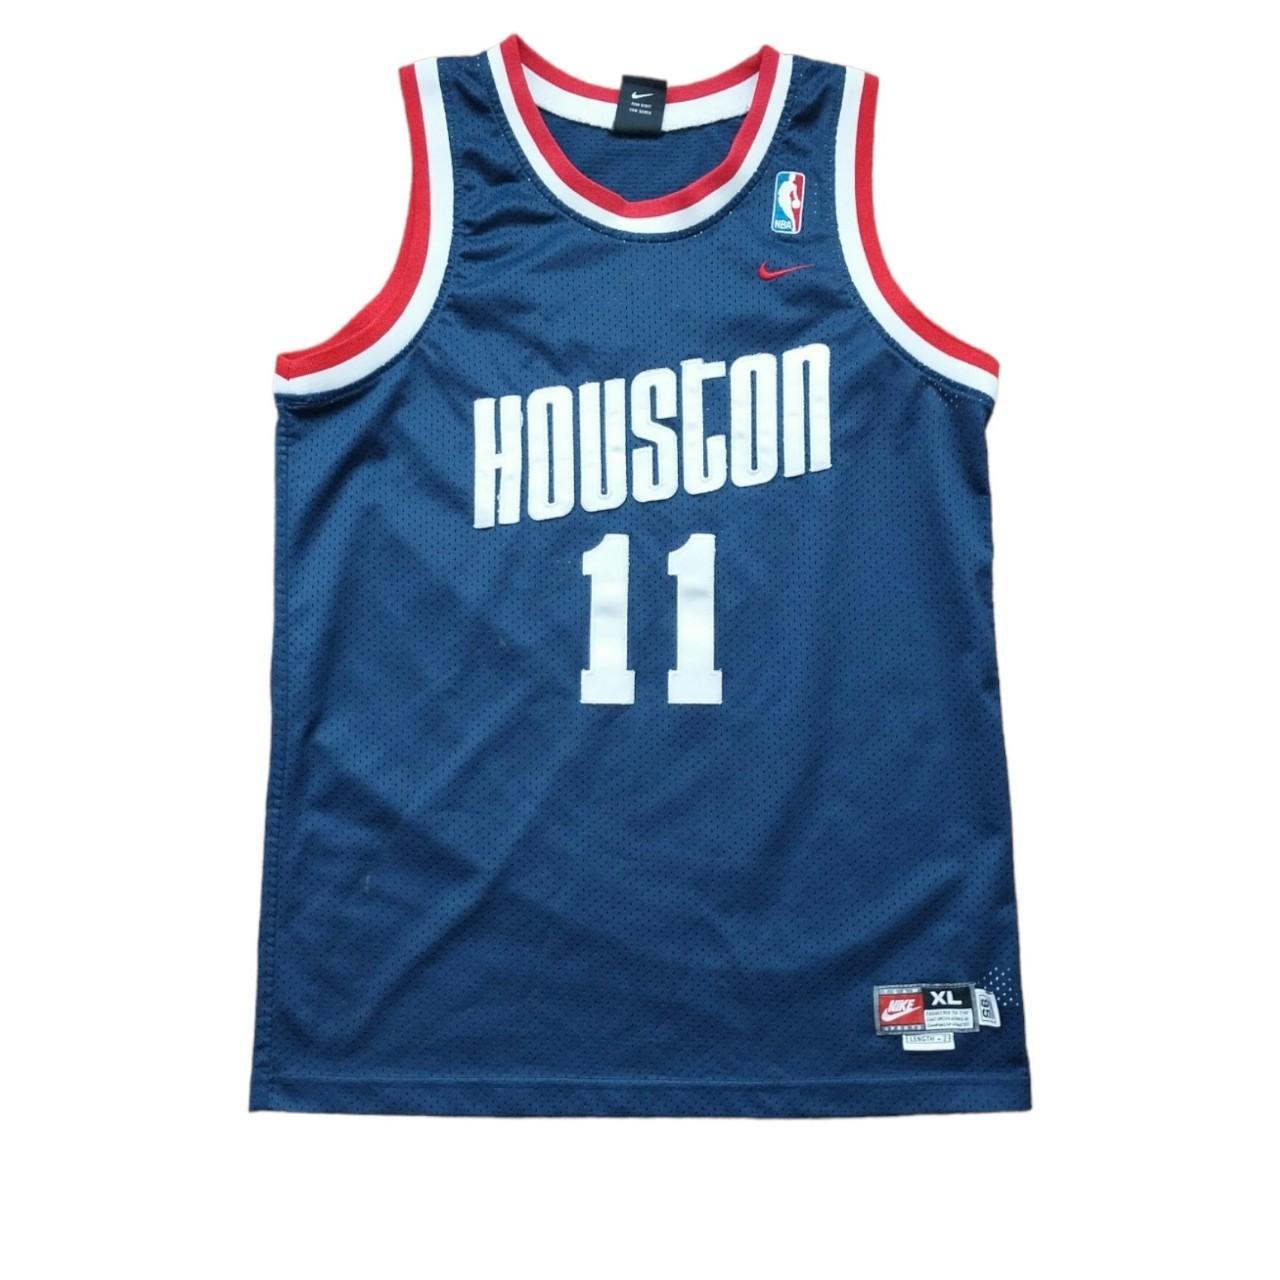 Nike Men's Houston Rockets Red Logo T-Shirt, XL